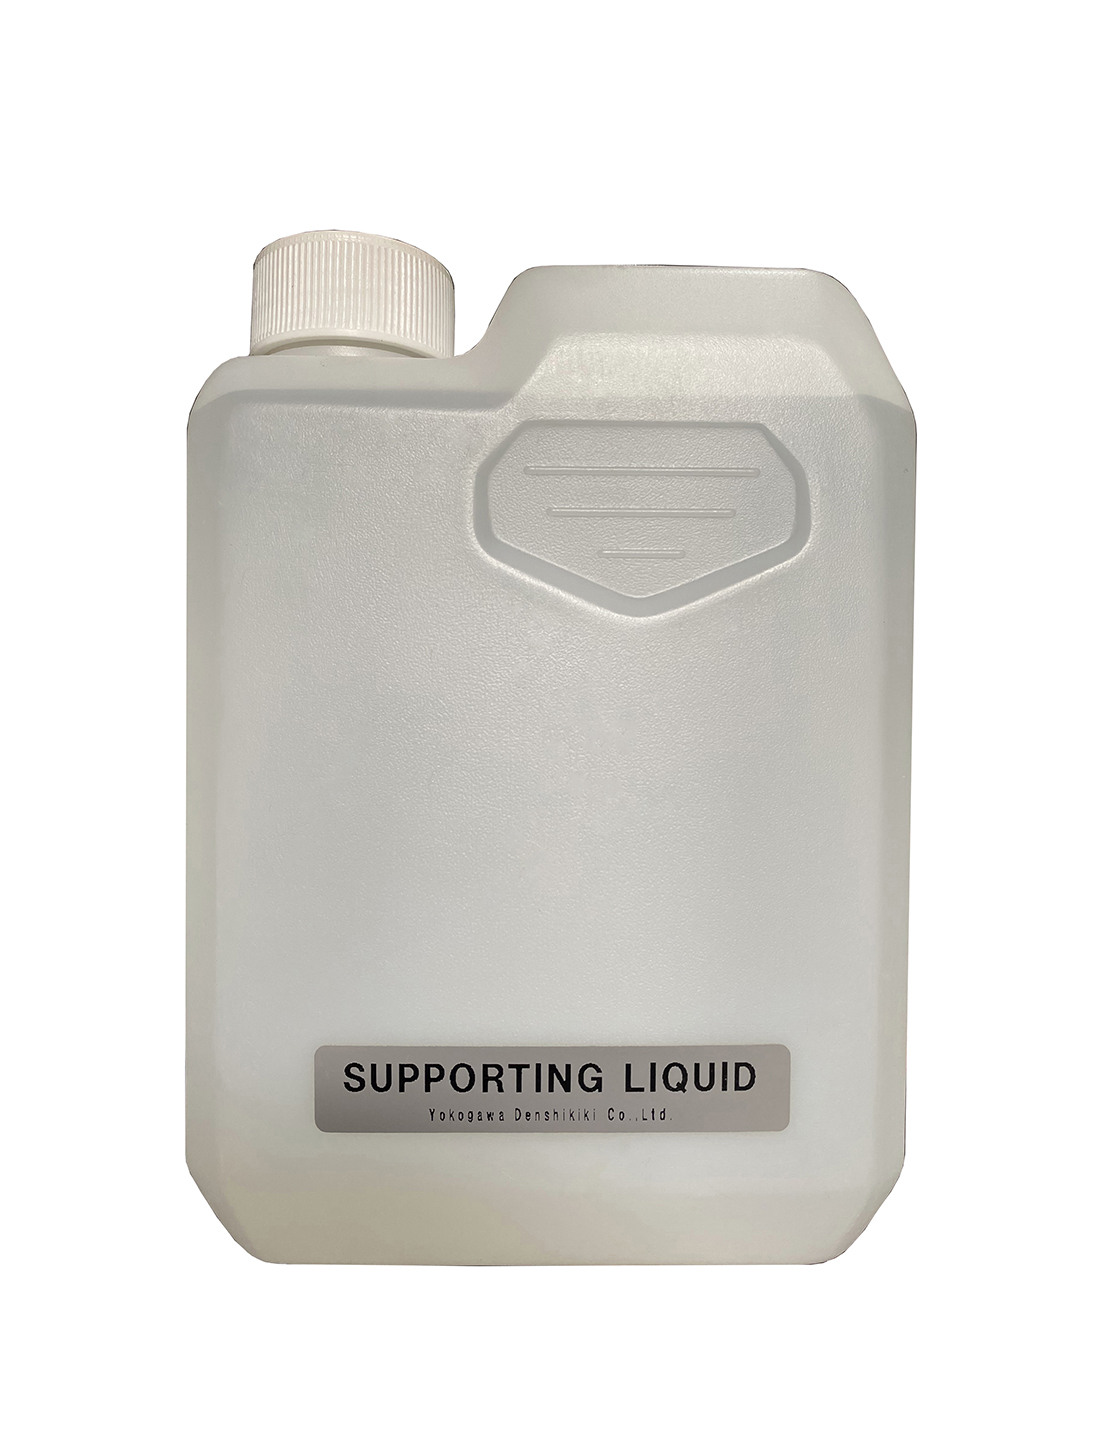 Yokogawa-supporting-liquid